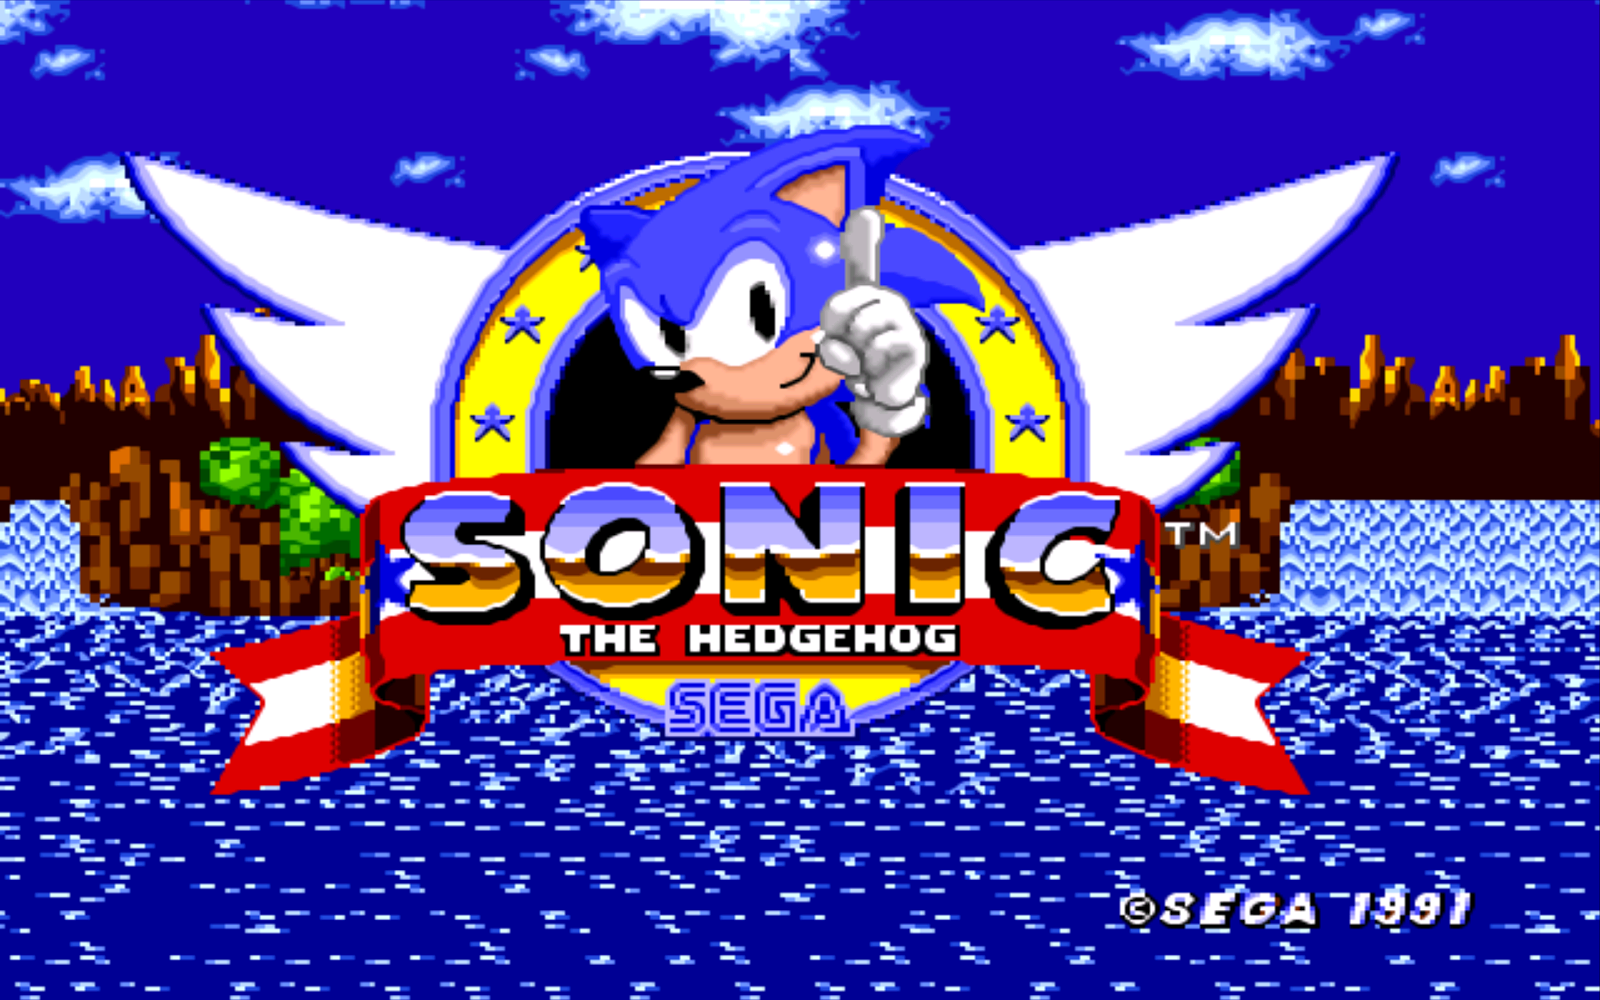 Sonic The Hedgehog Megadrive